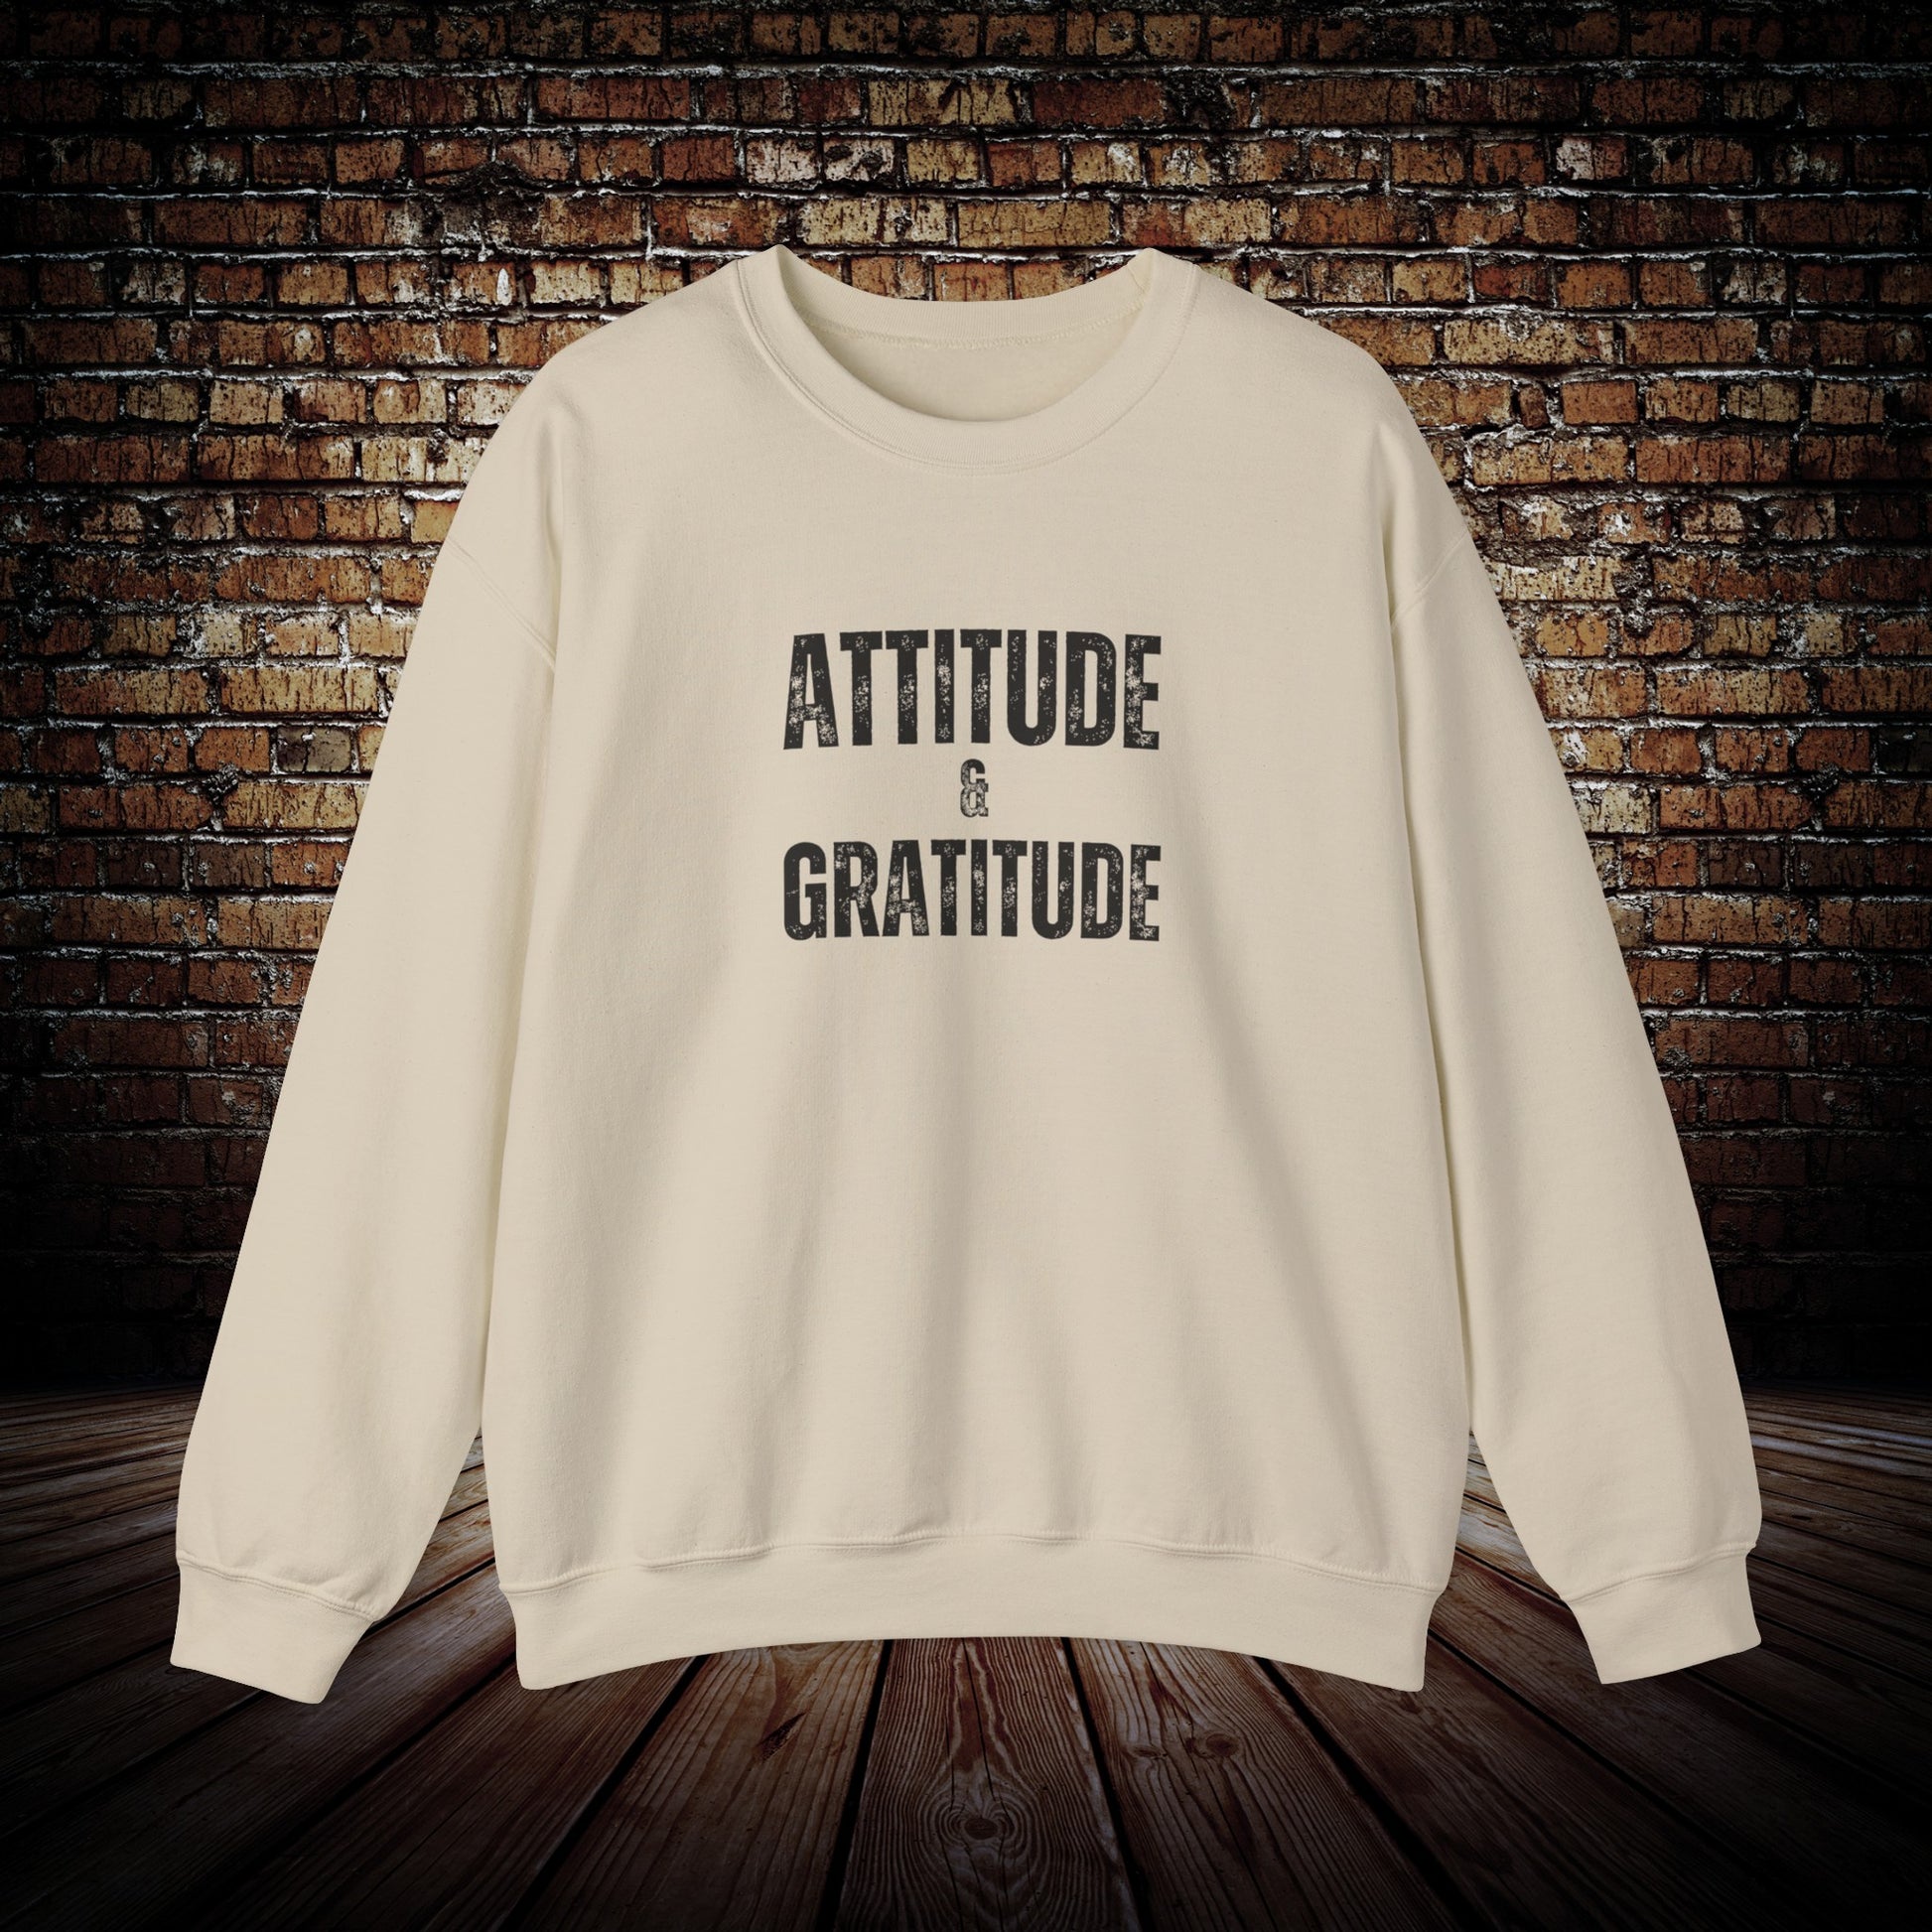 Attitude and gratitude sweatshirt